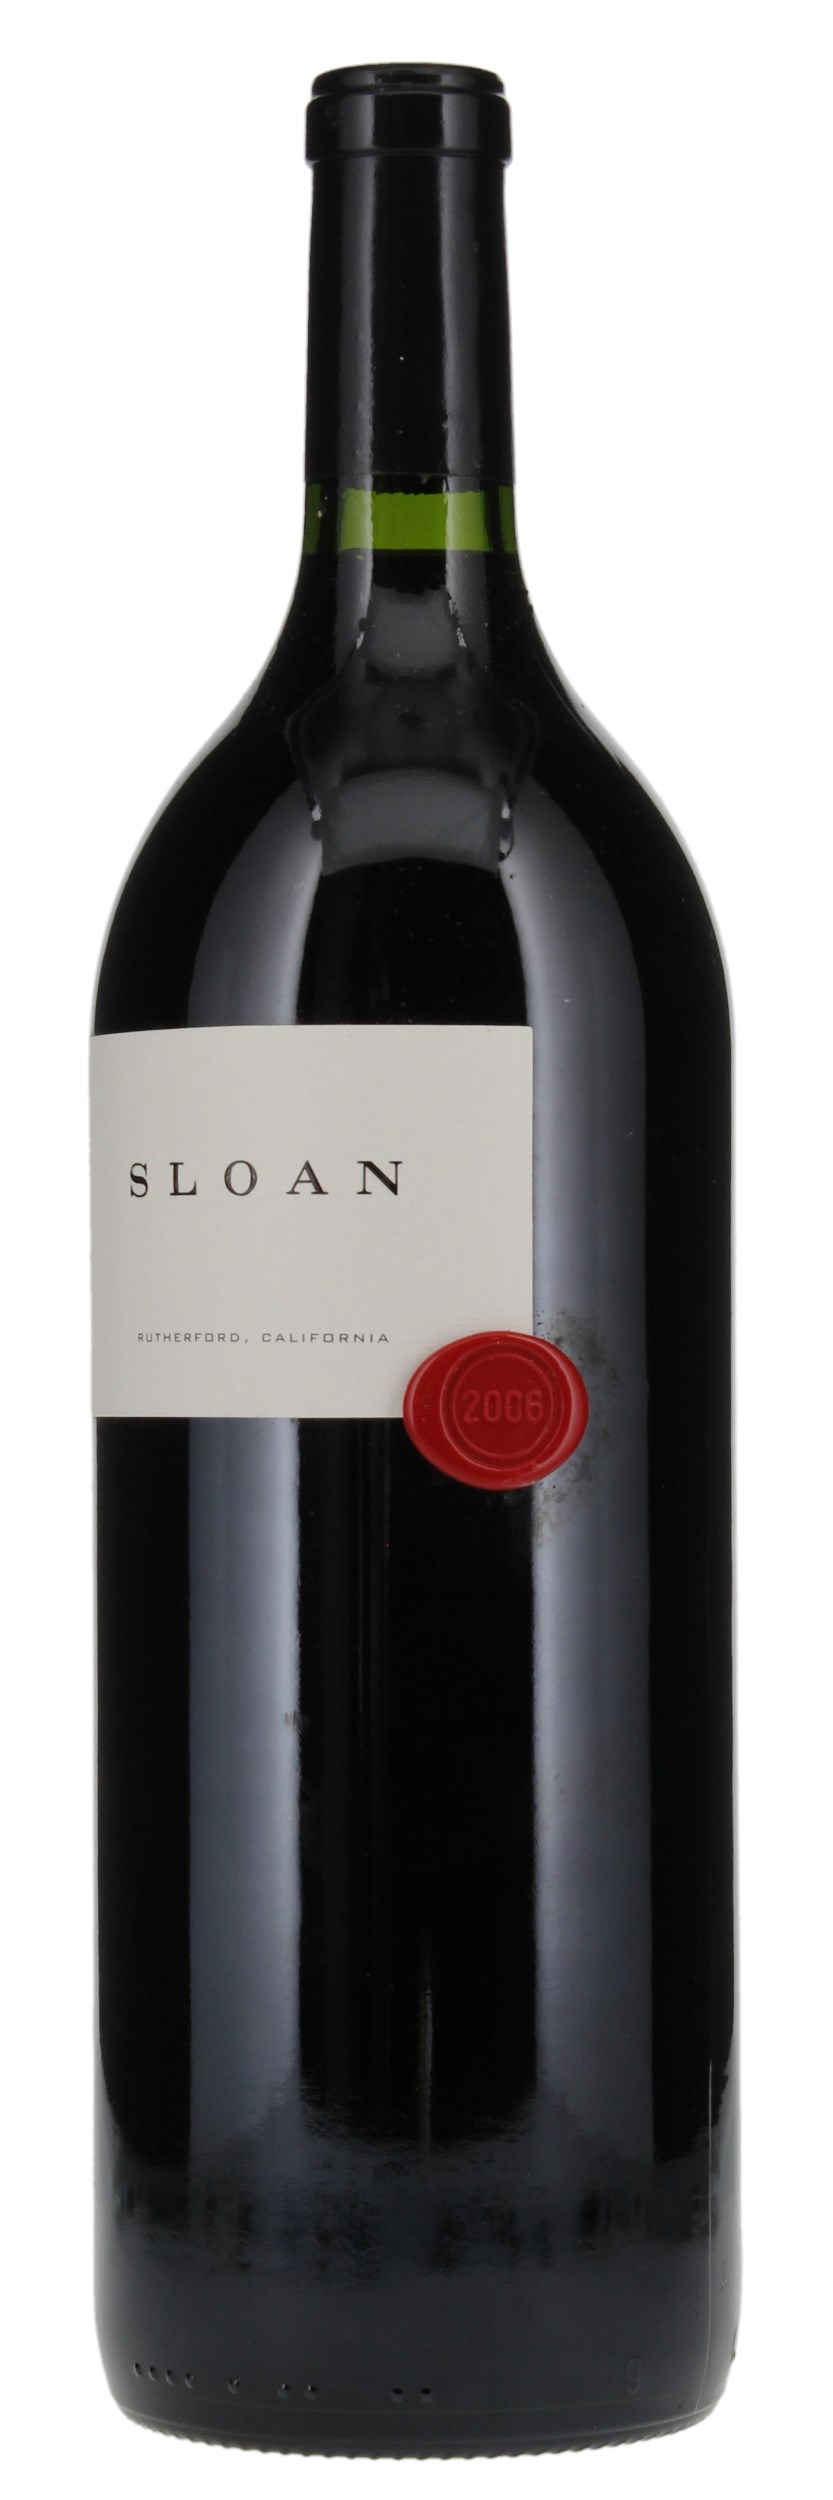 2006 Sloan Proprietary Red, 1.5ltr